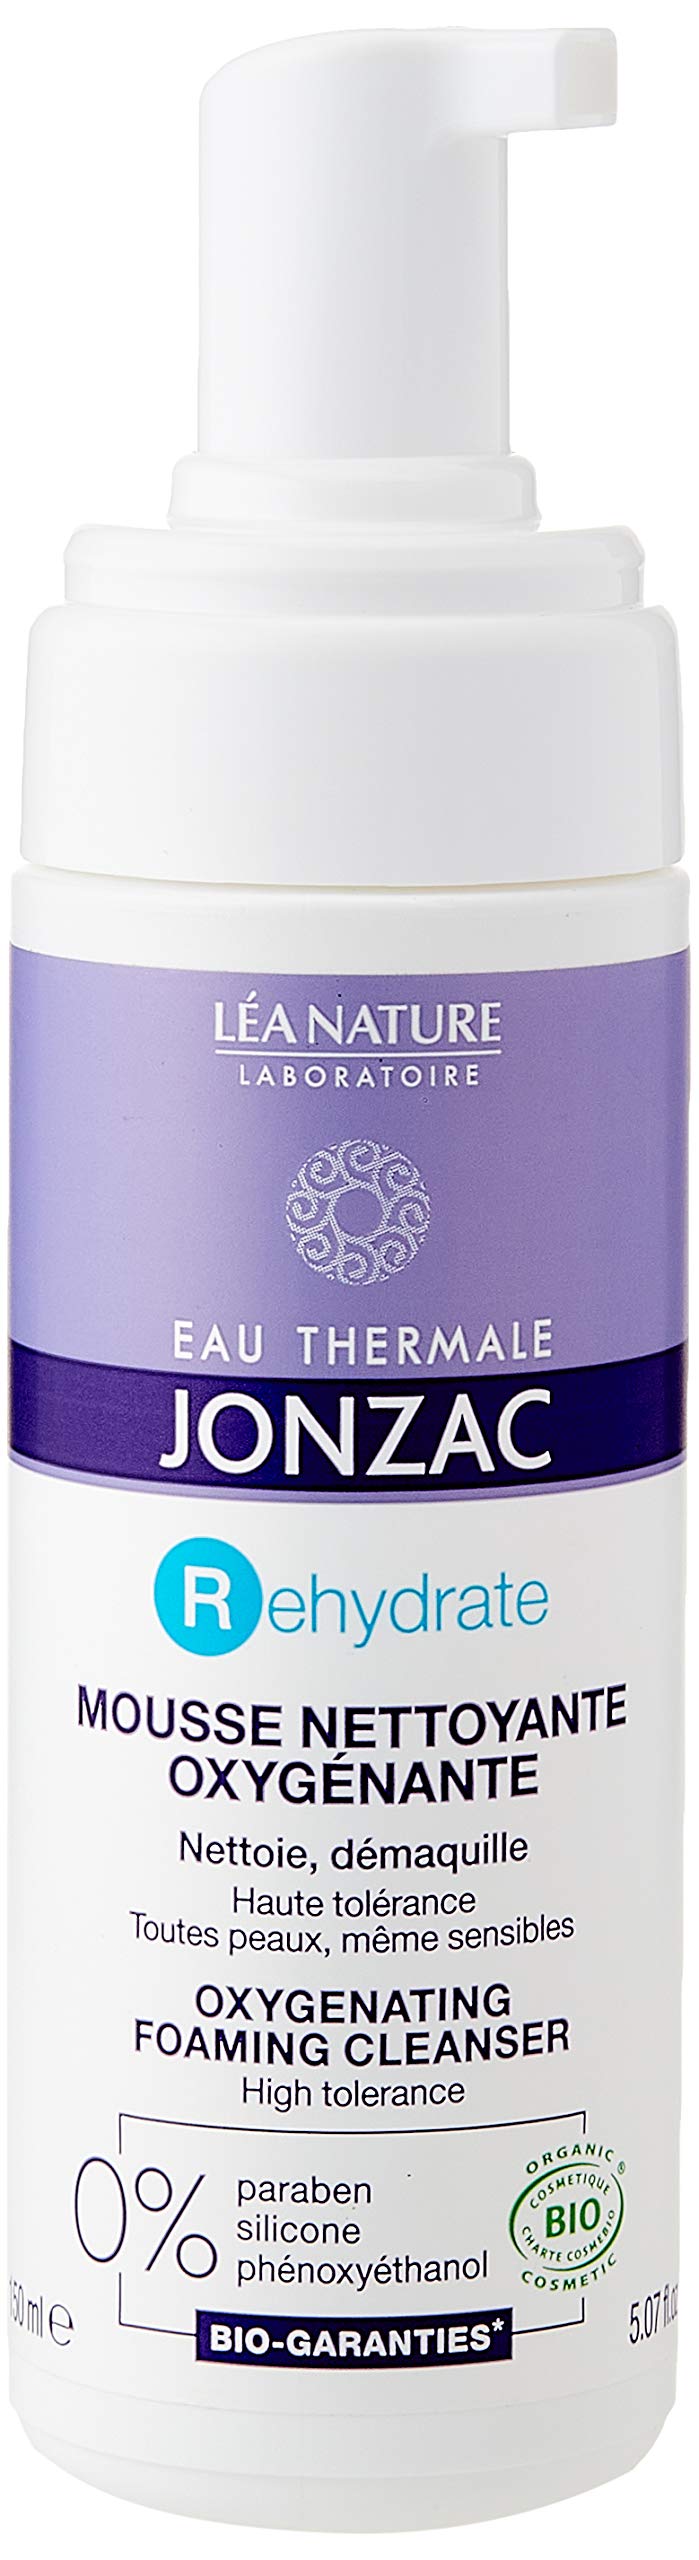 Eau Thermale Jonzac Organic Cosmetic Detox Oxygenating Foaming Cleanser, 150 ml - NewNest Australia